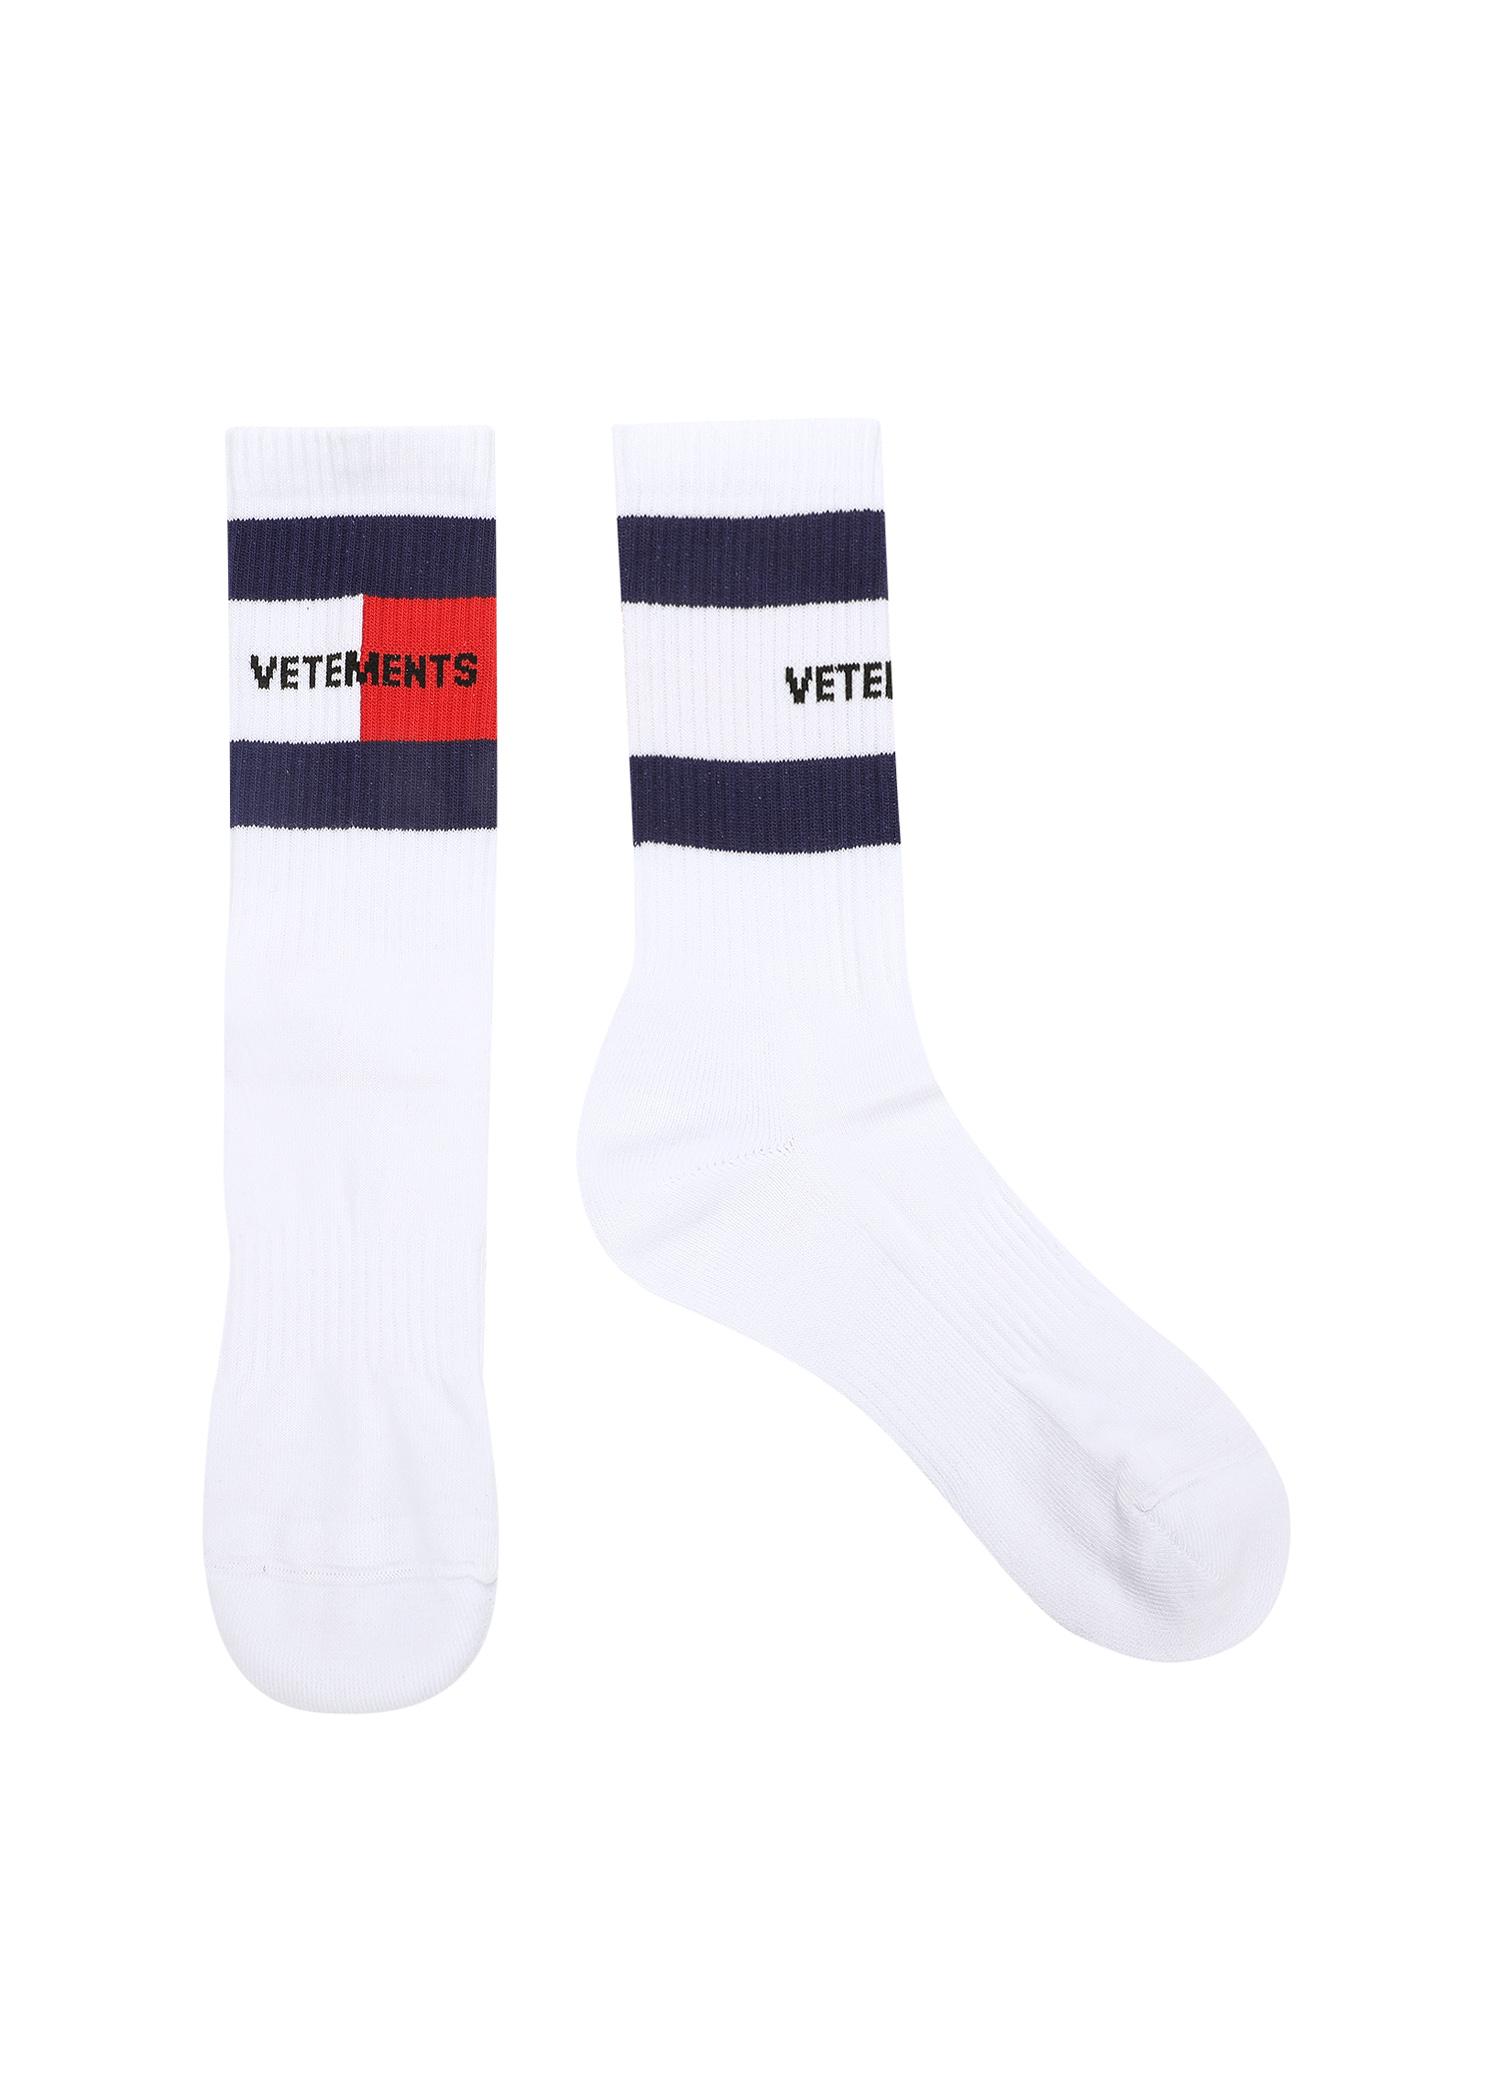 Tommy Hilfiger Vetements Socks on Sale, 53% OFF | www.chine-magazine.com